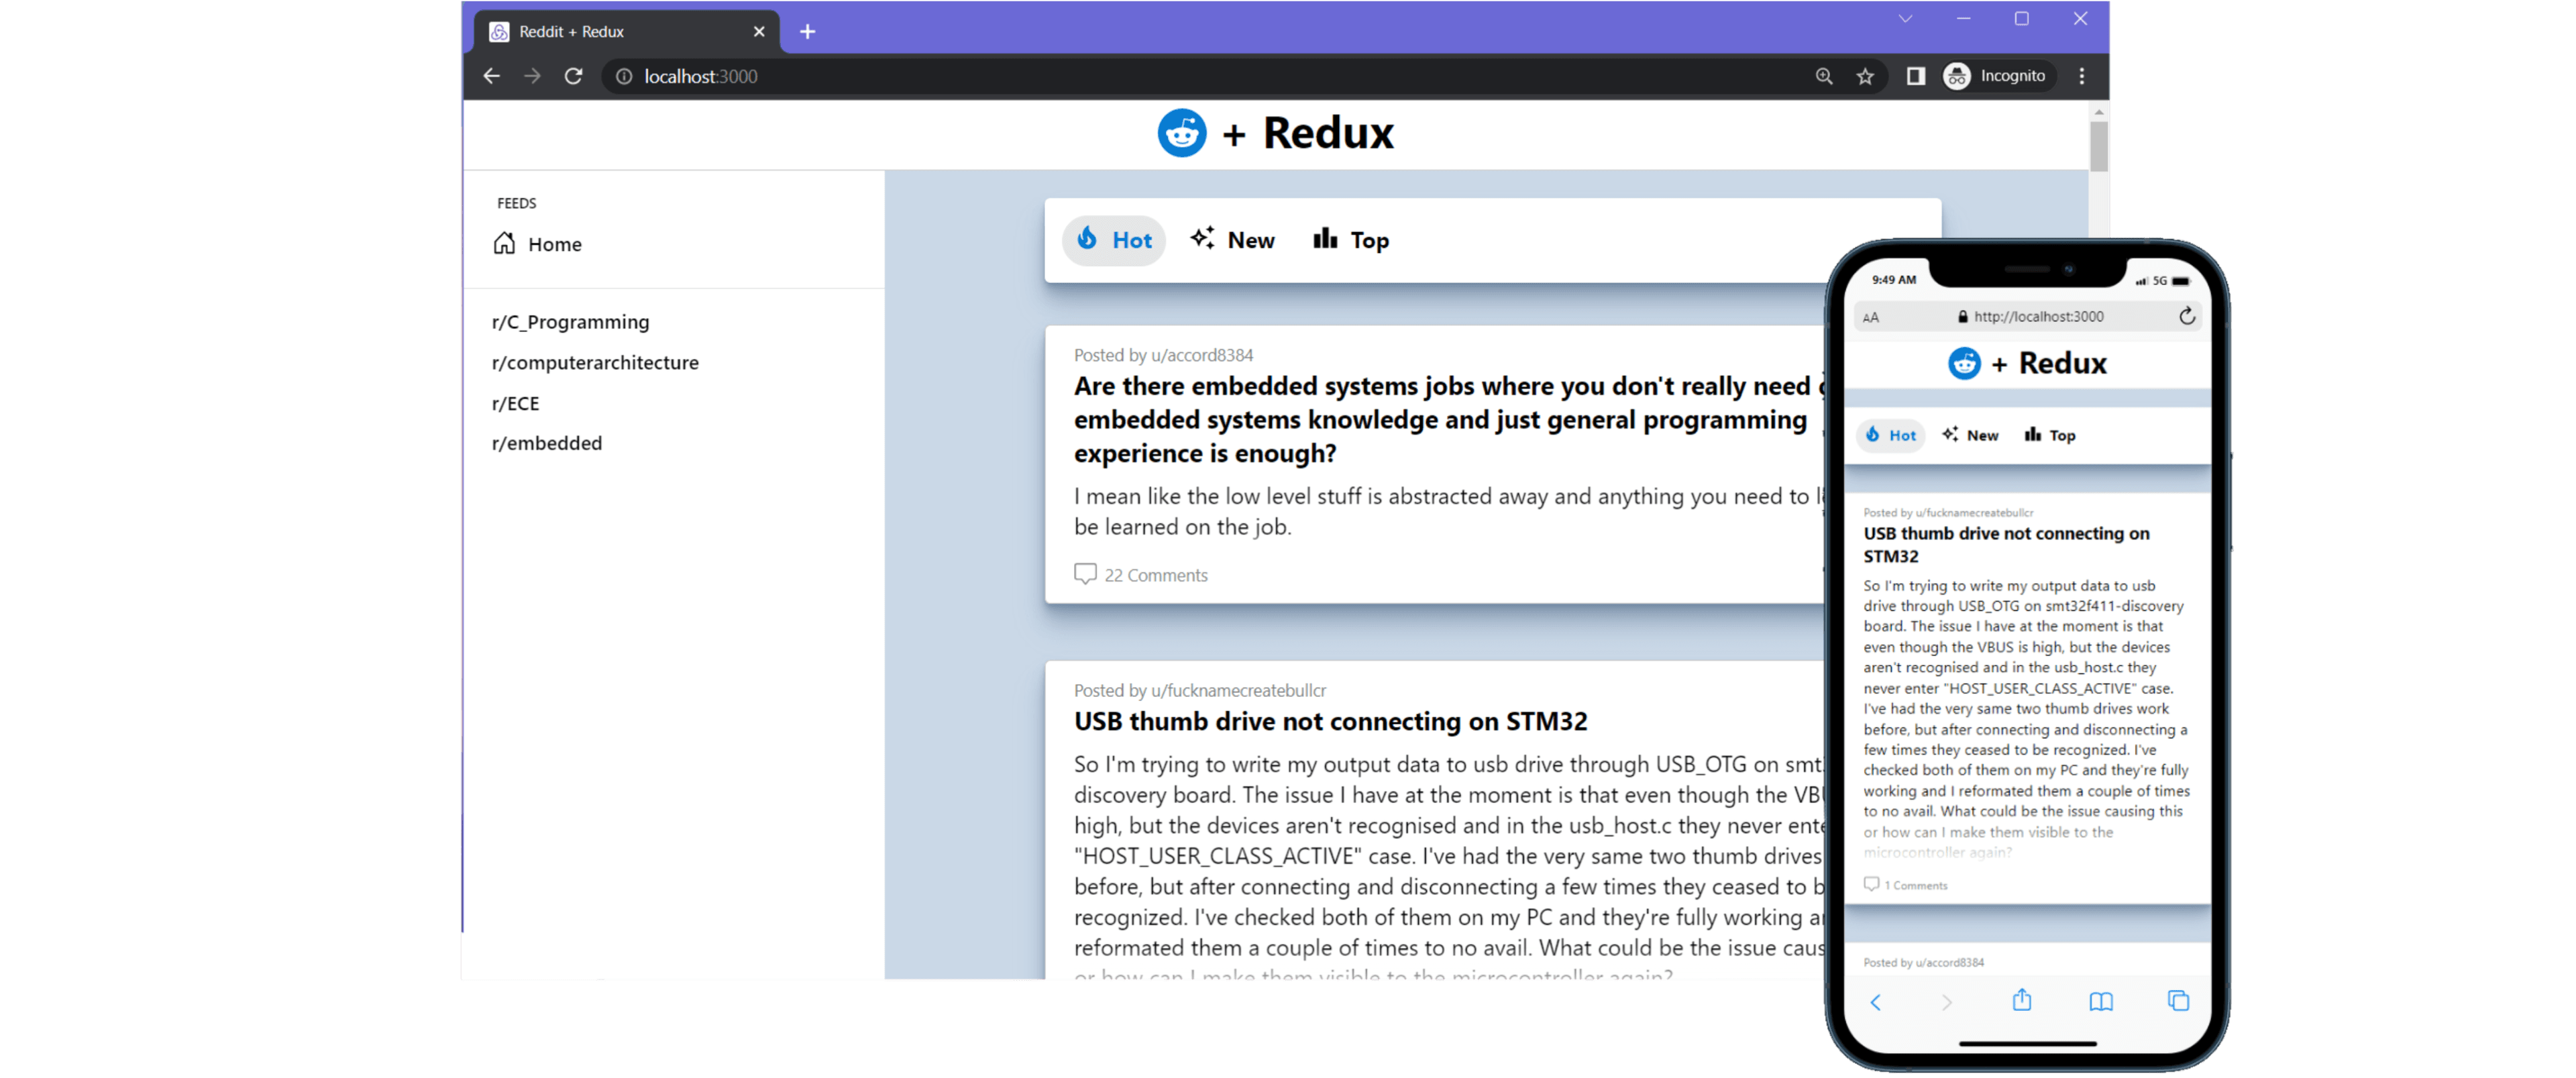 Demo photo of Reddit Redux project